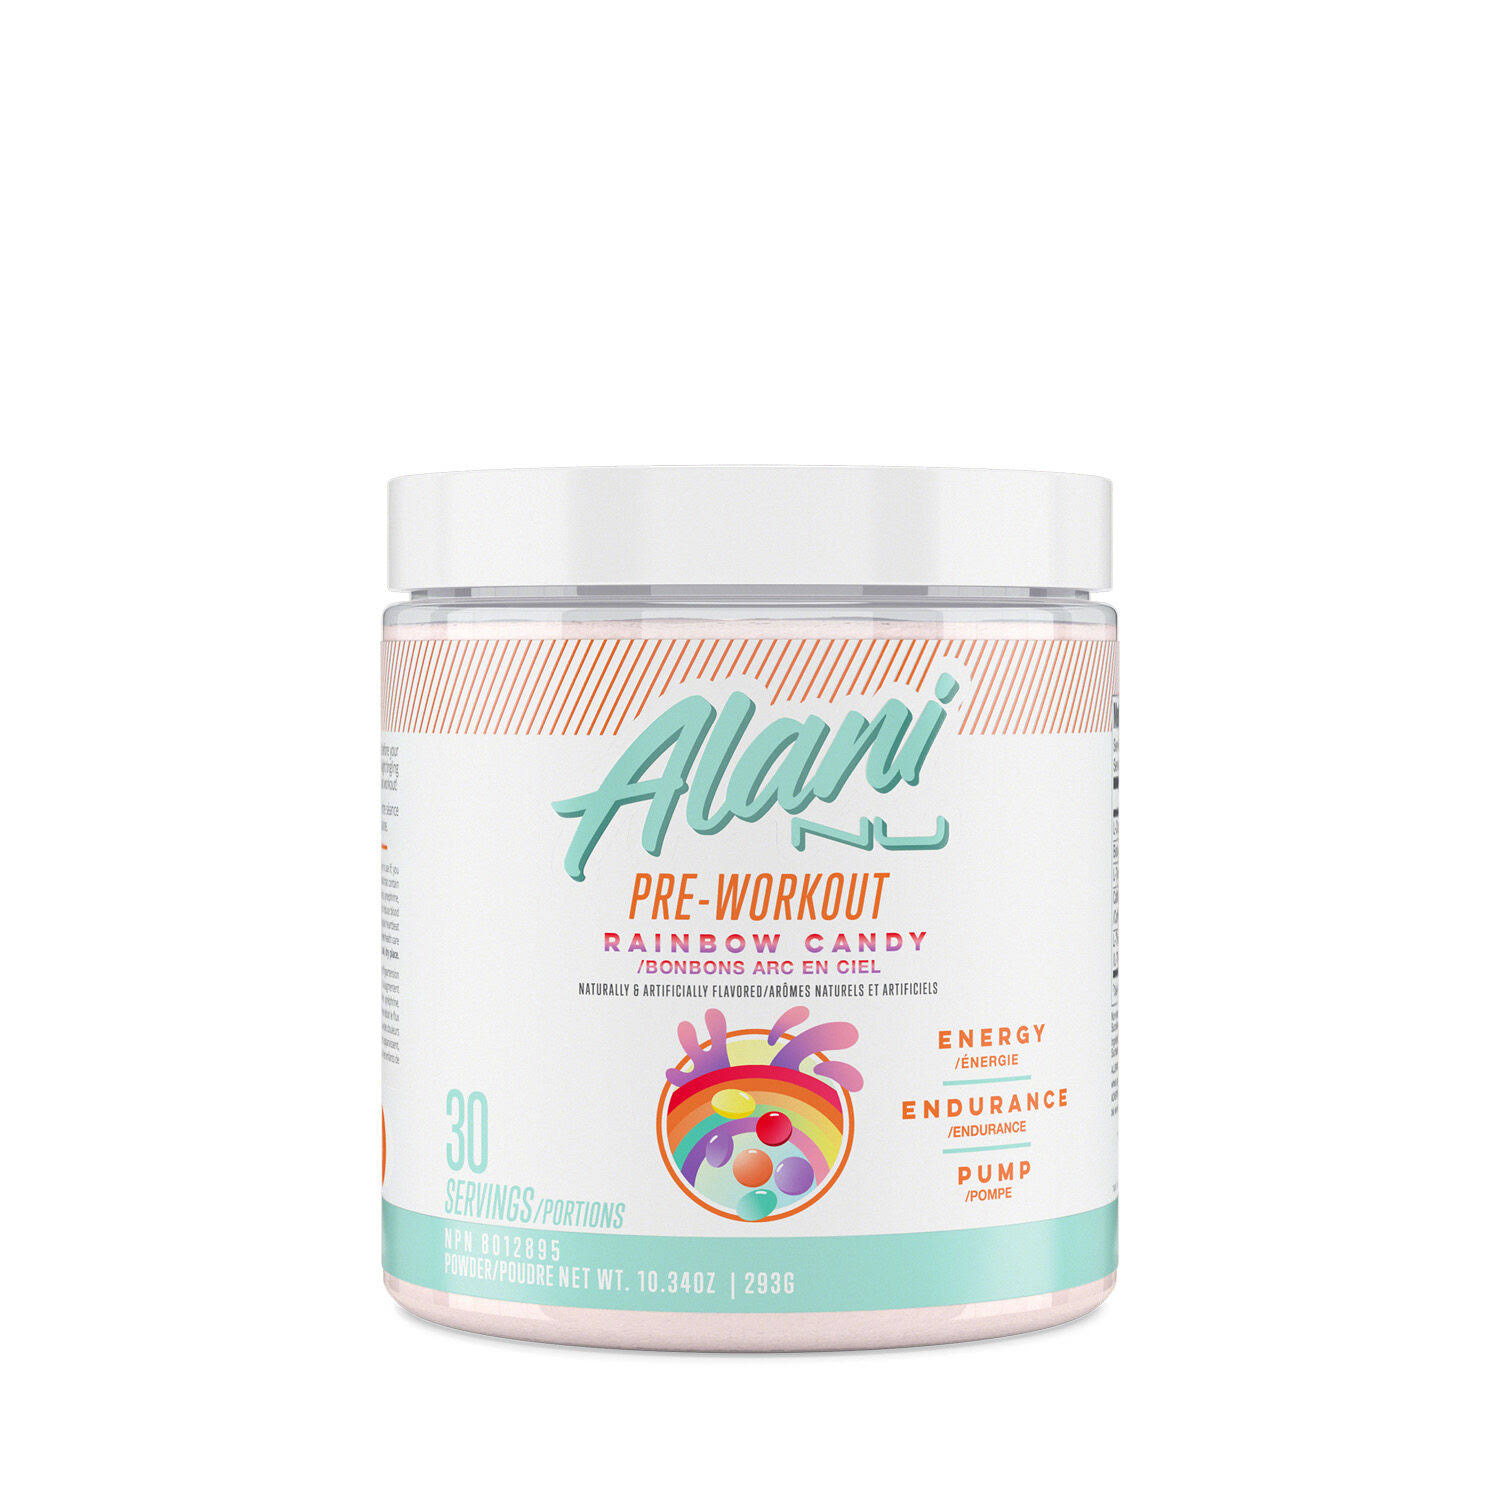 Alani Nu Rainbow Candy Pre-Workout